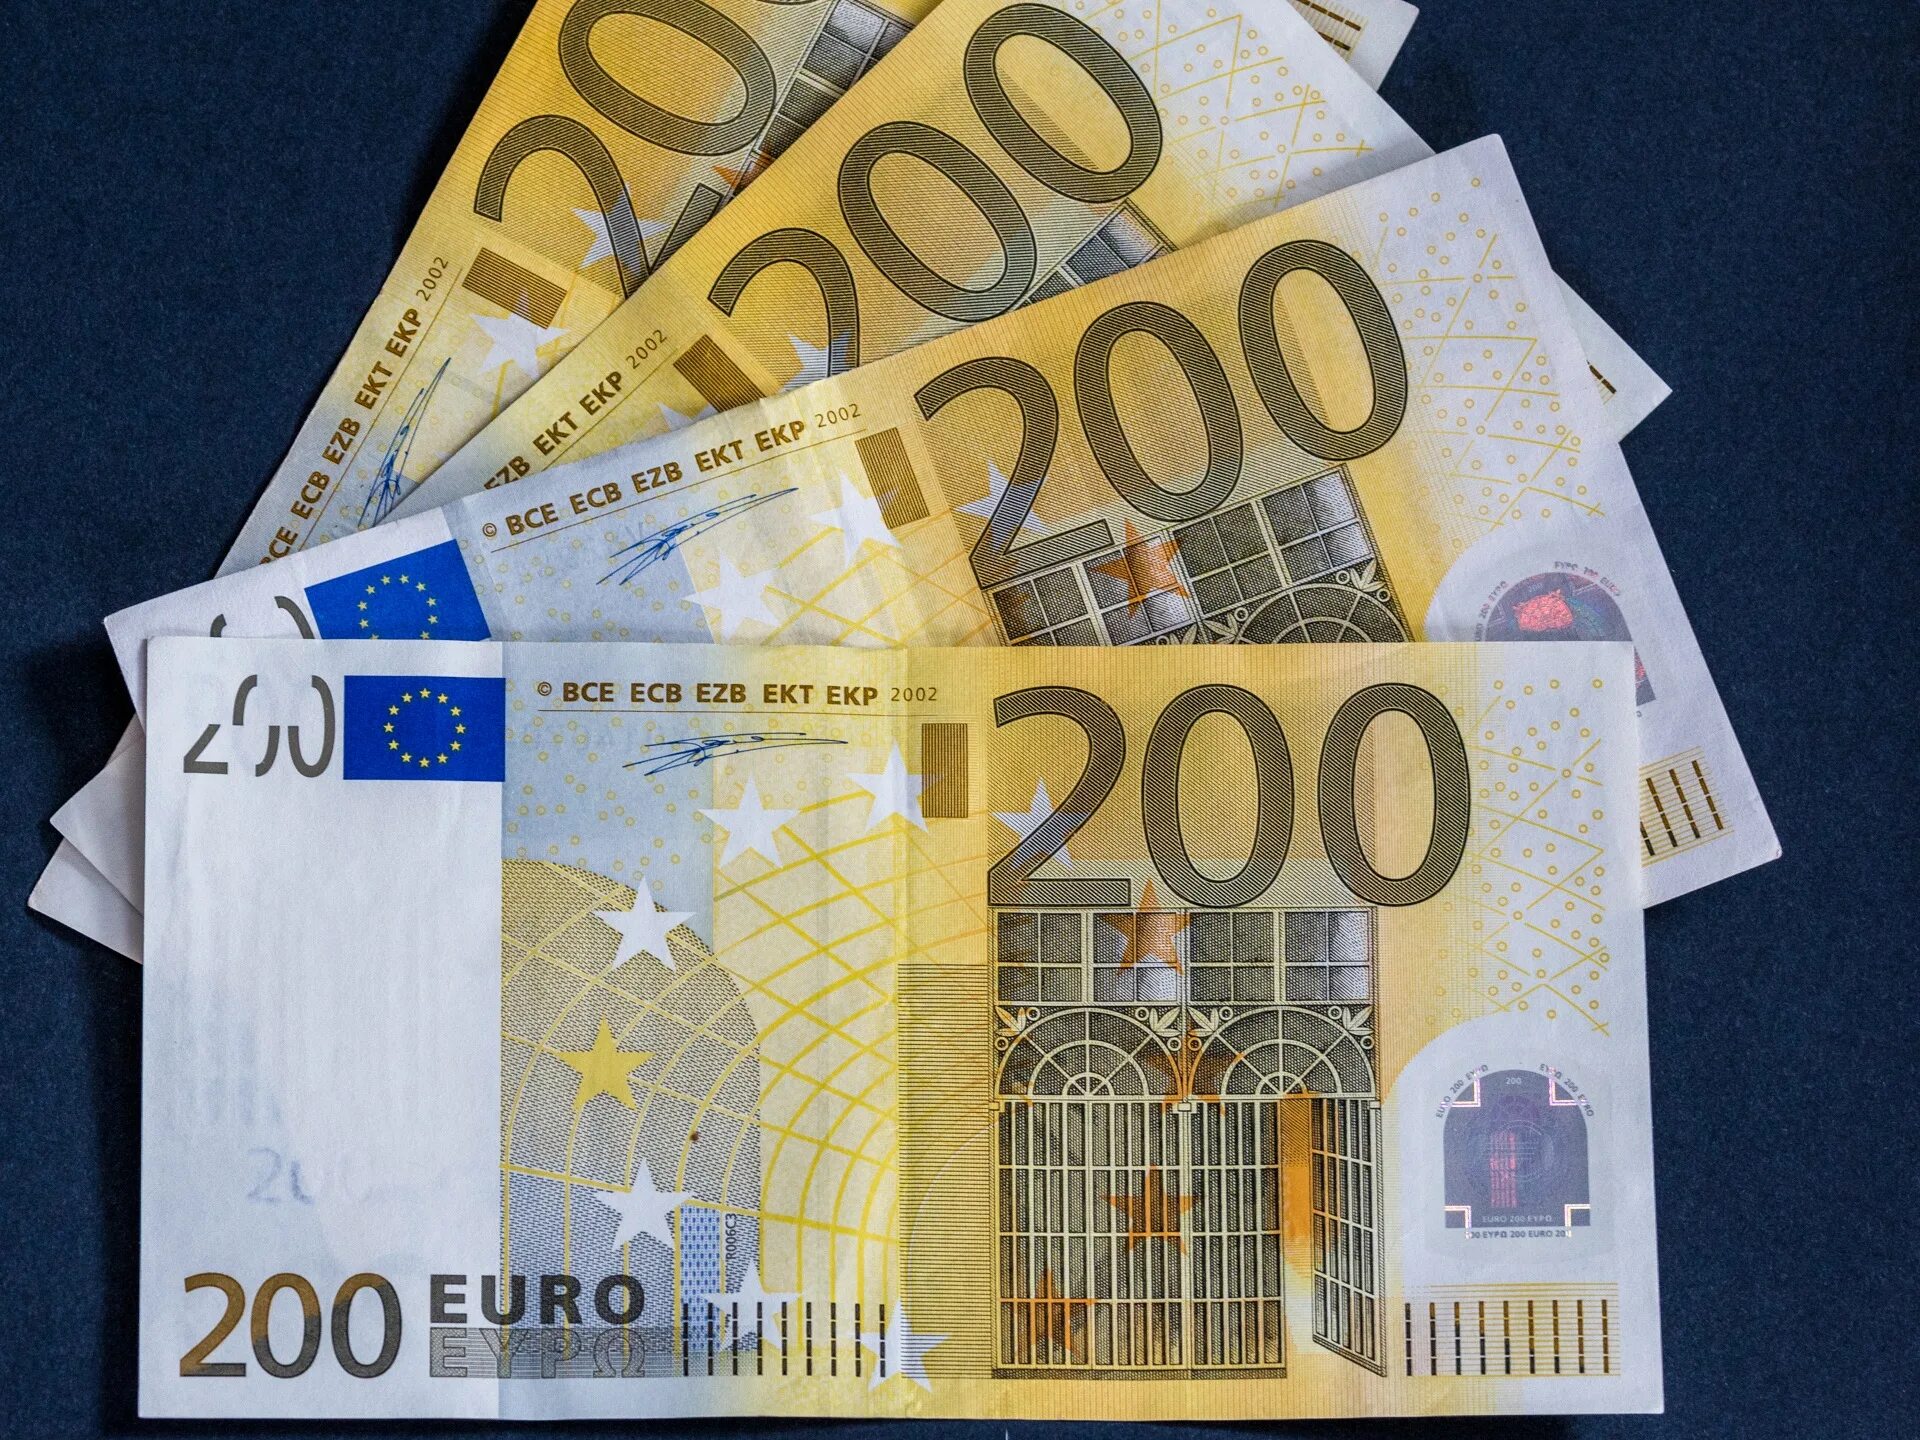 Банкноты евро 200. 200 Евро. Двести евро купюра. 200 Евро оригинал. Образцы евро купюр